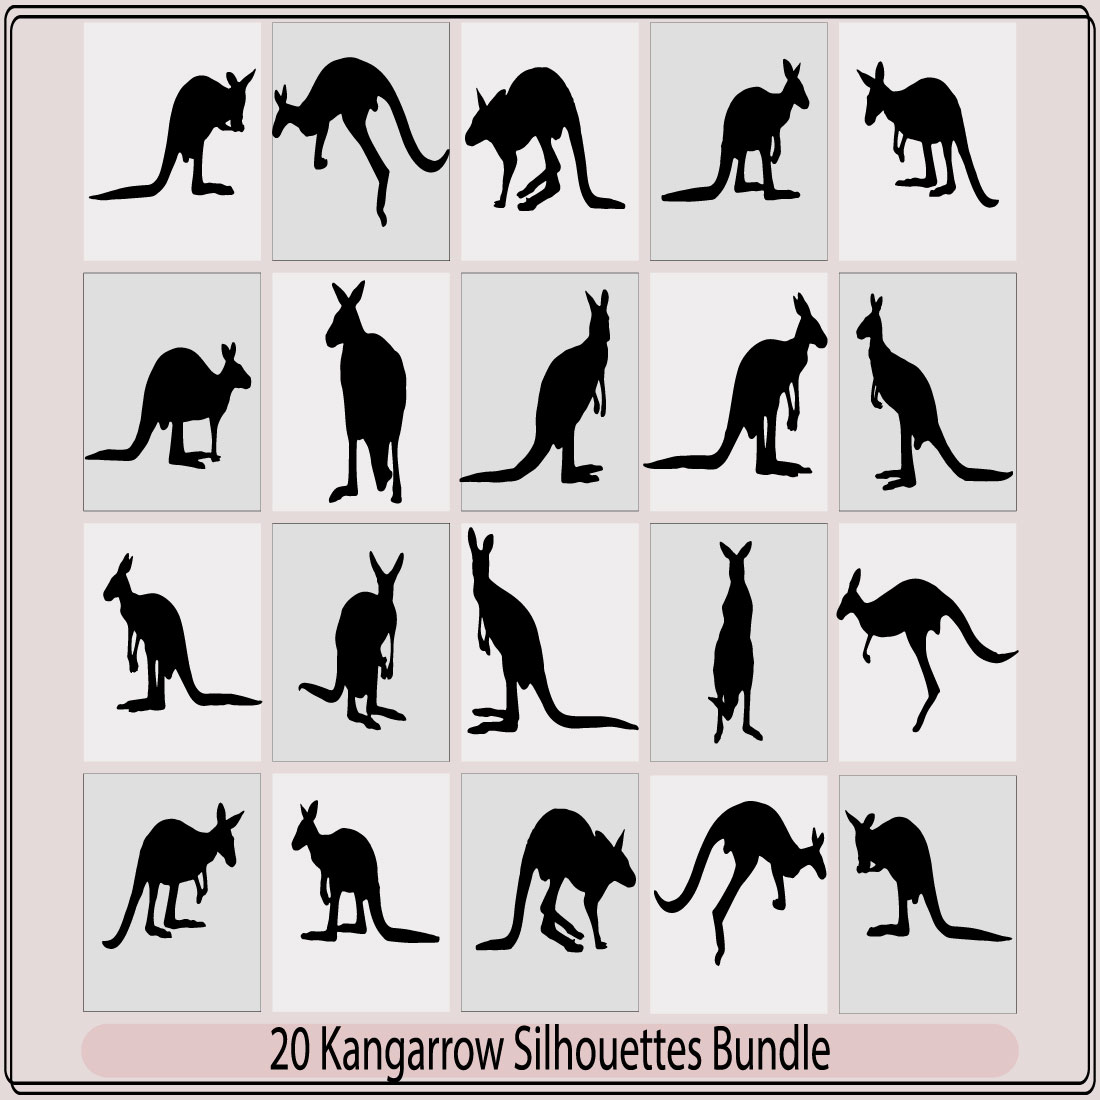 Kangaroo vector silhouette,collection of kangaroo silhouette kangaroo silhouette,Set silhouettes of kangaroo,kangaroo logo icon designs vector preview image.